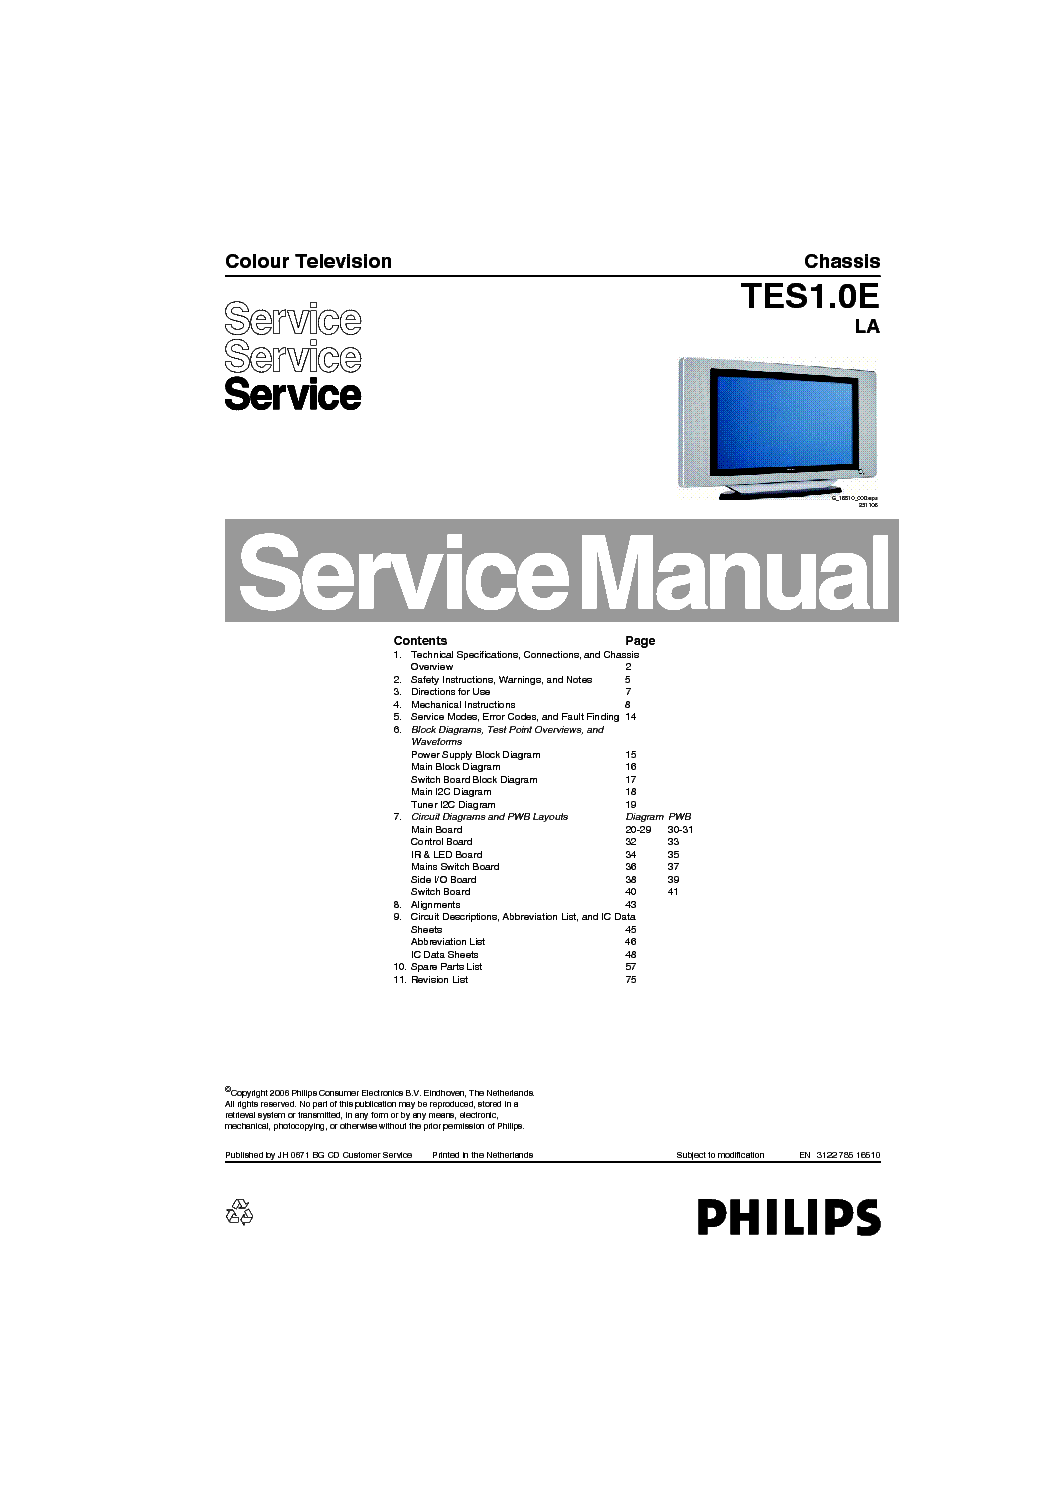 PHILIPS CHASSIS TES1.0E-LA SM service manual (1st page)